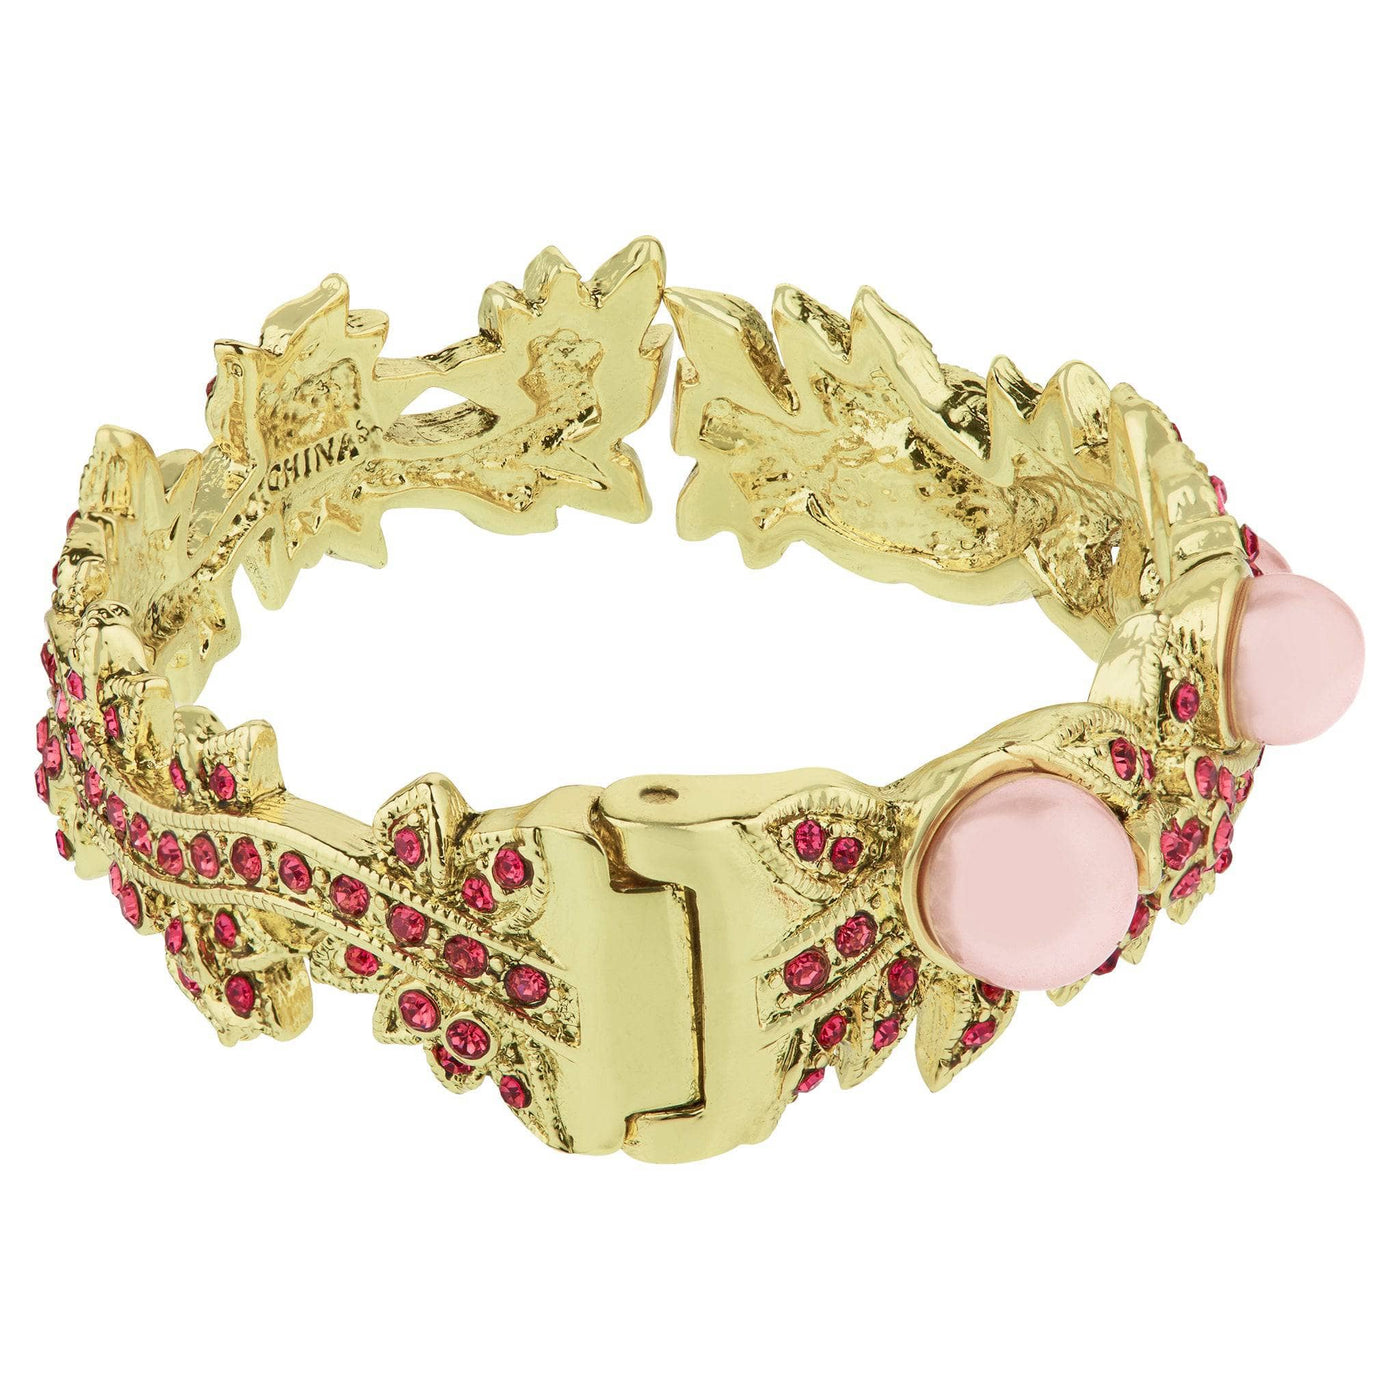 HEIDI DAUS®"Vine And Divine" Beaded Crystal Floral Bracelet